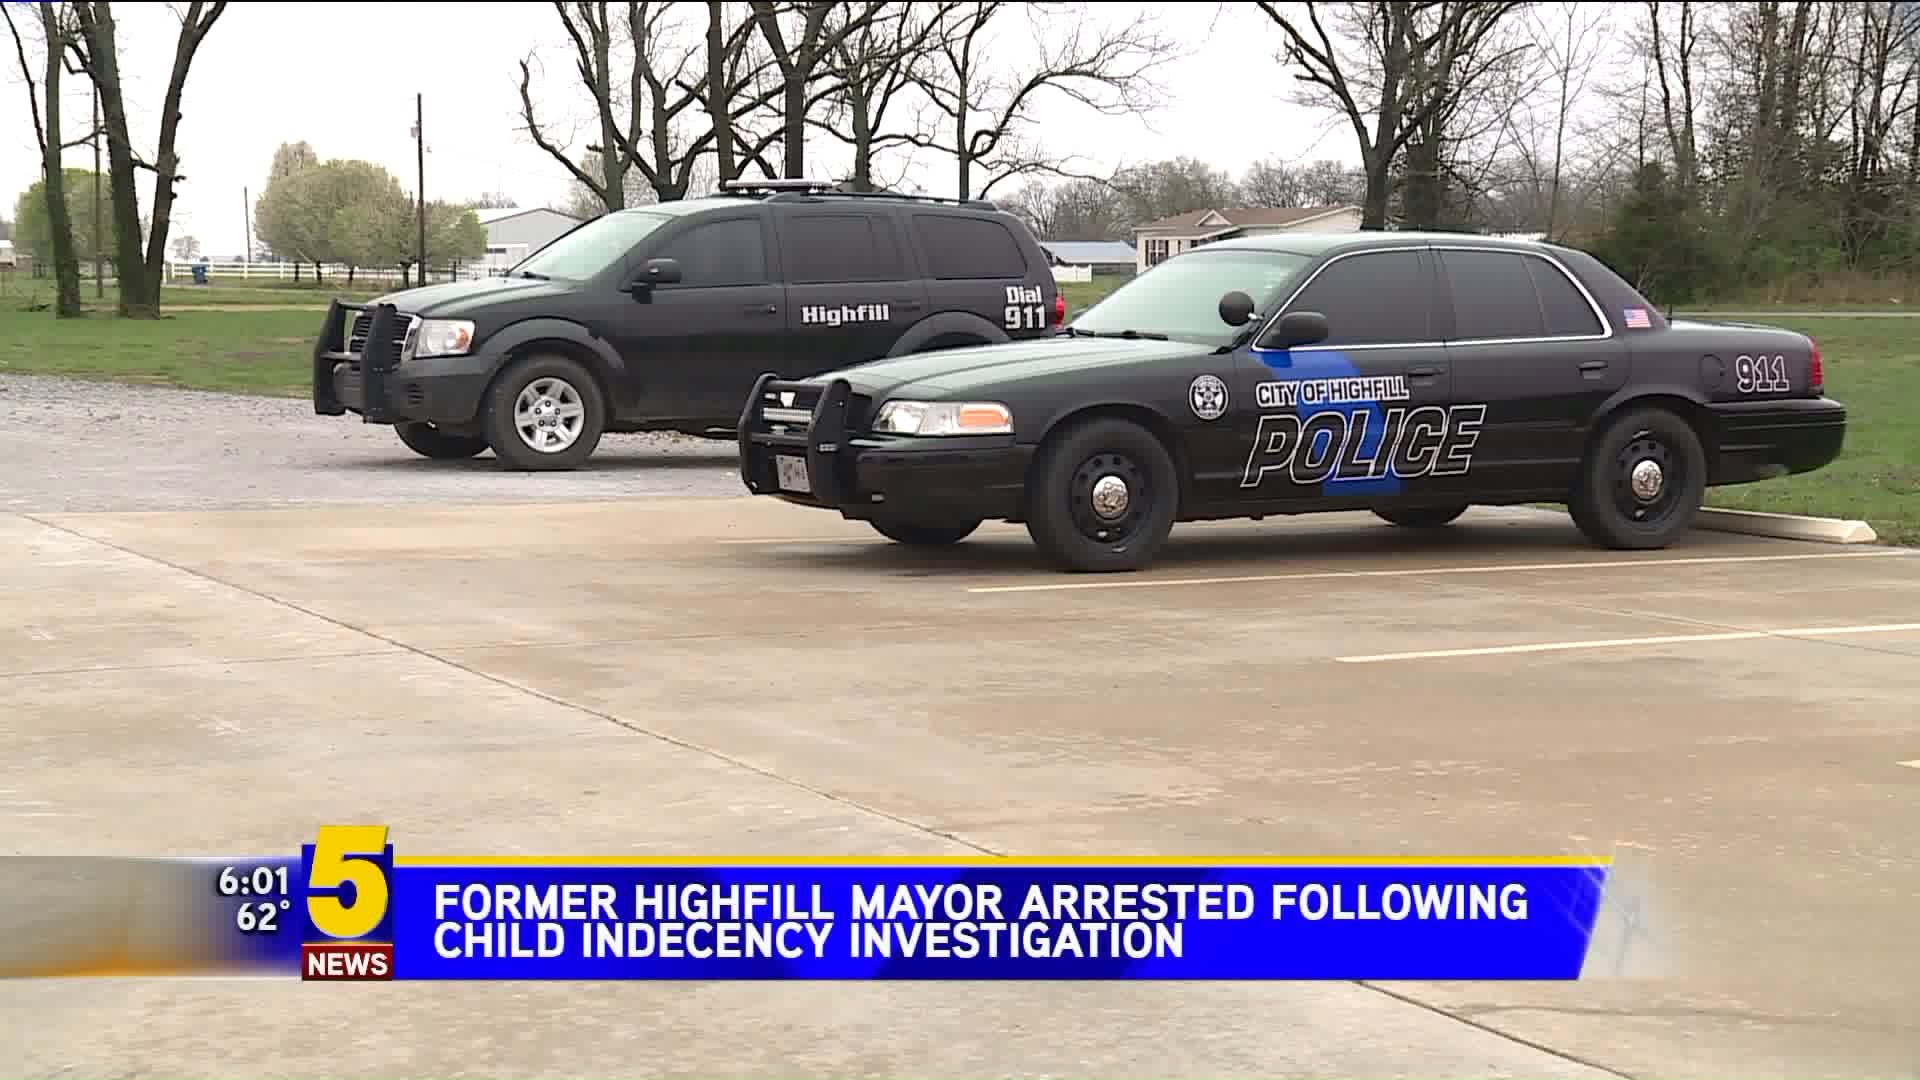 Former Highfill Mayor Arrested Following Child Indecency Investigation